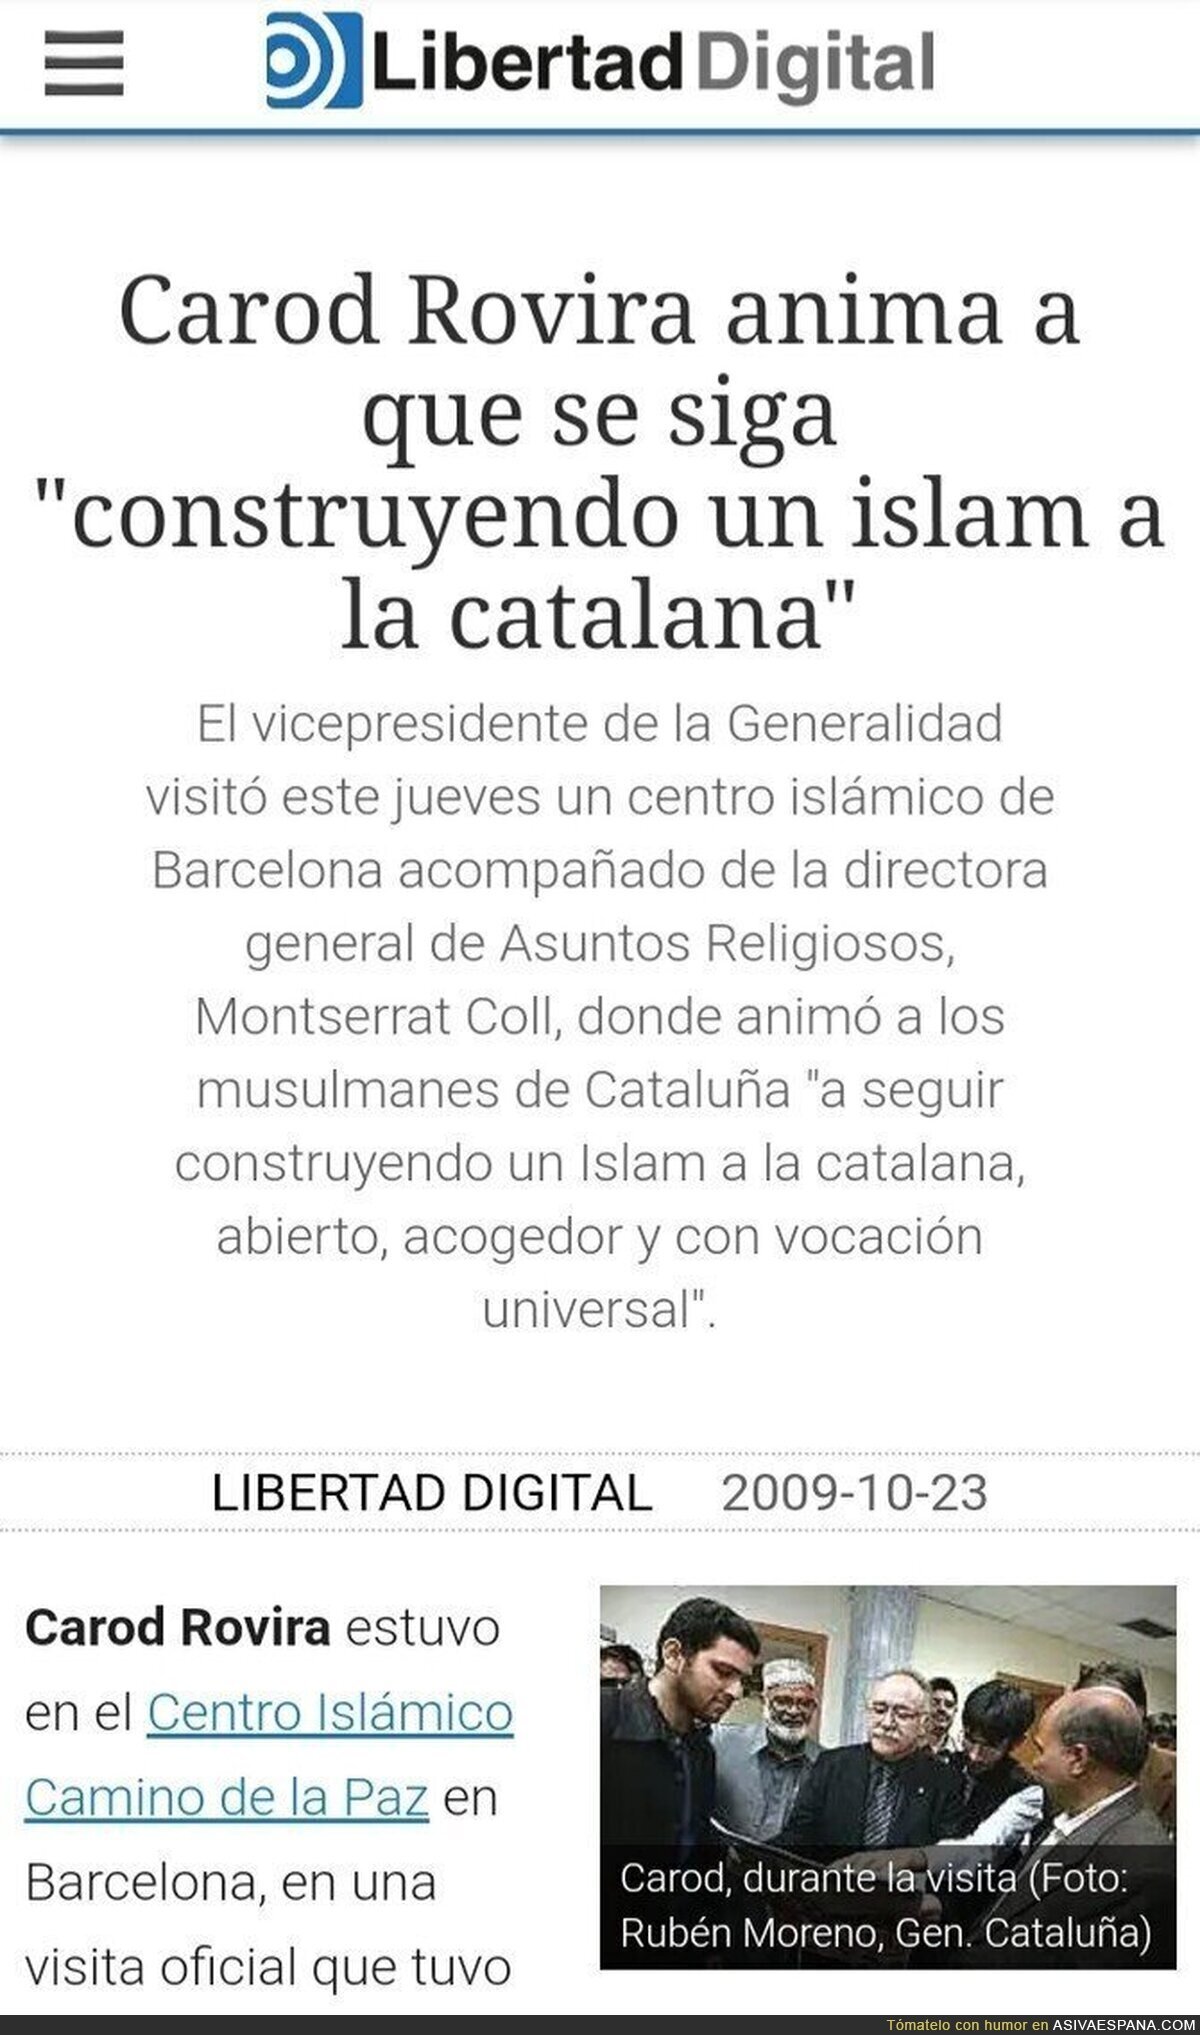 La hemeroteca catalanista tiene noticias inquietantes